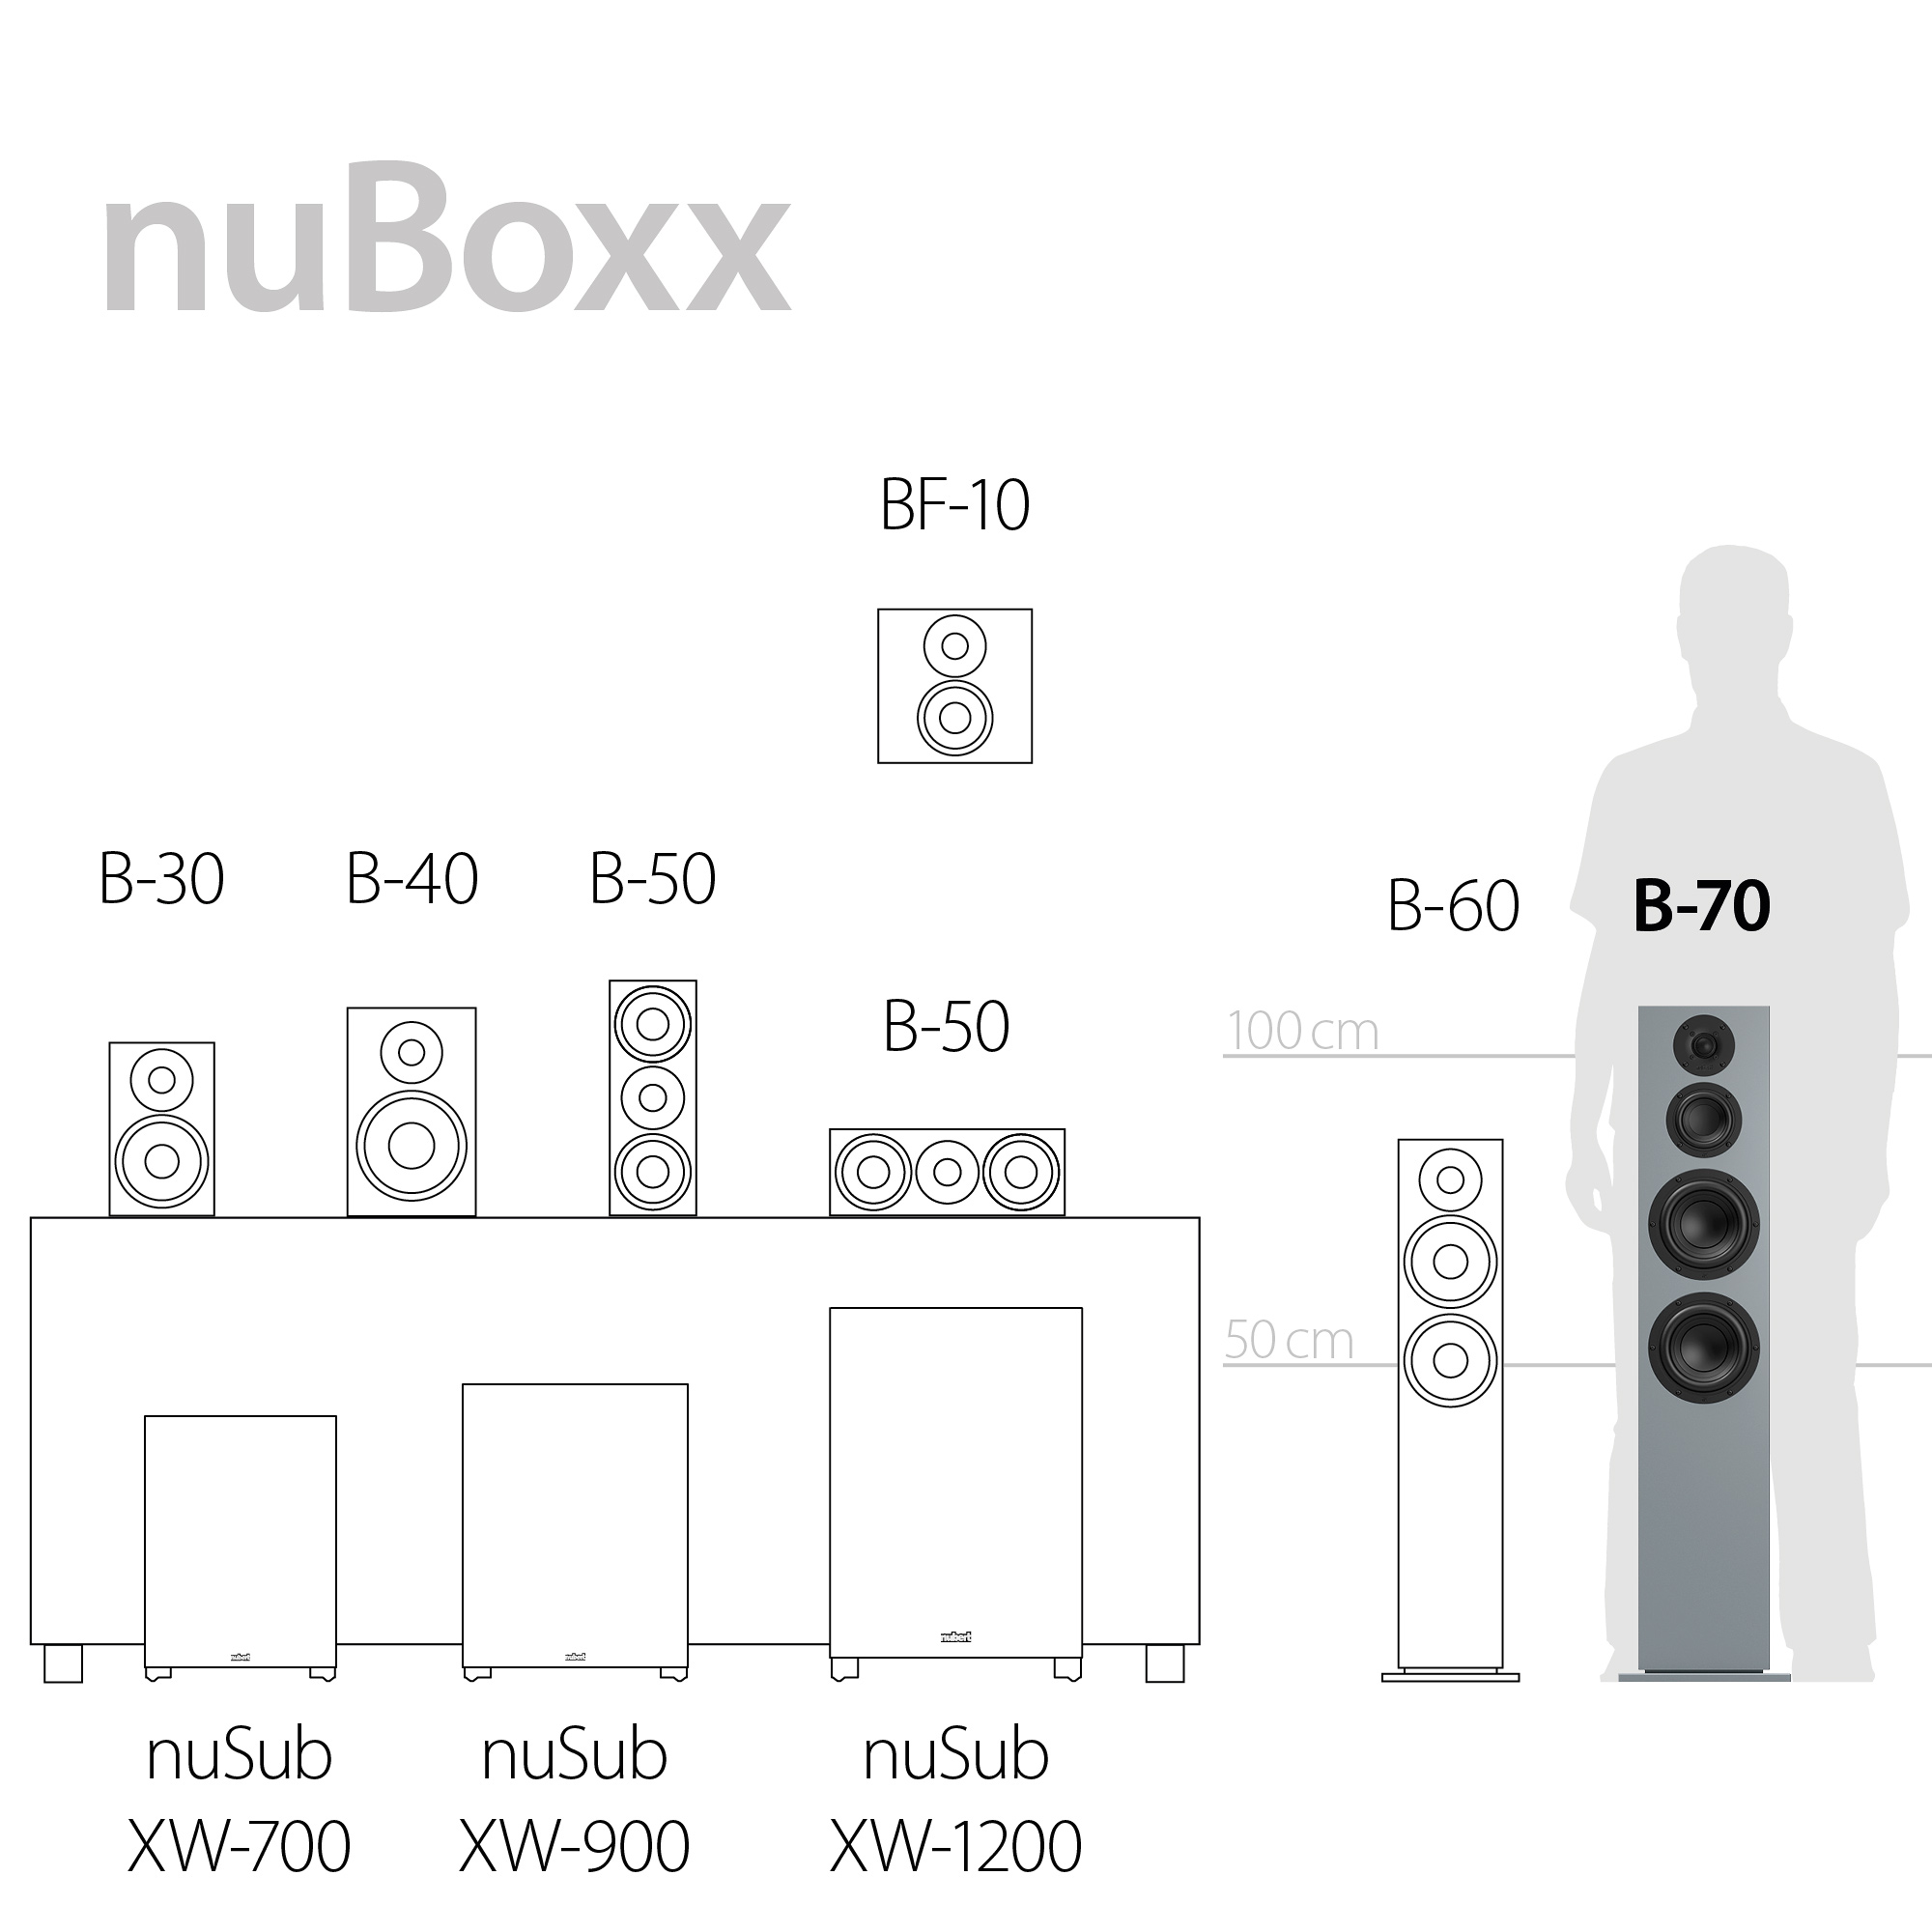 nuBoxx B-70 Serienüberblick